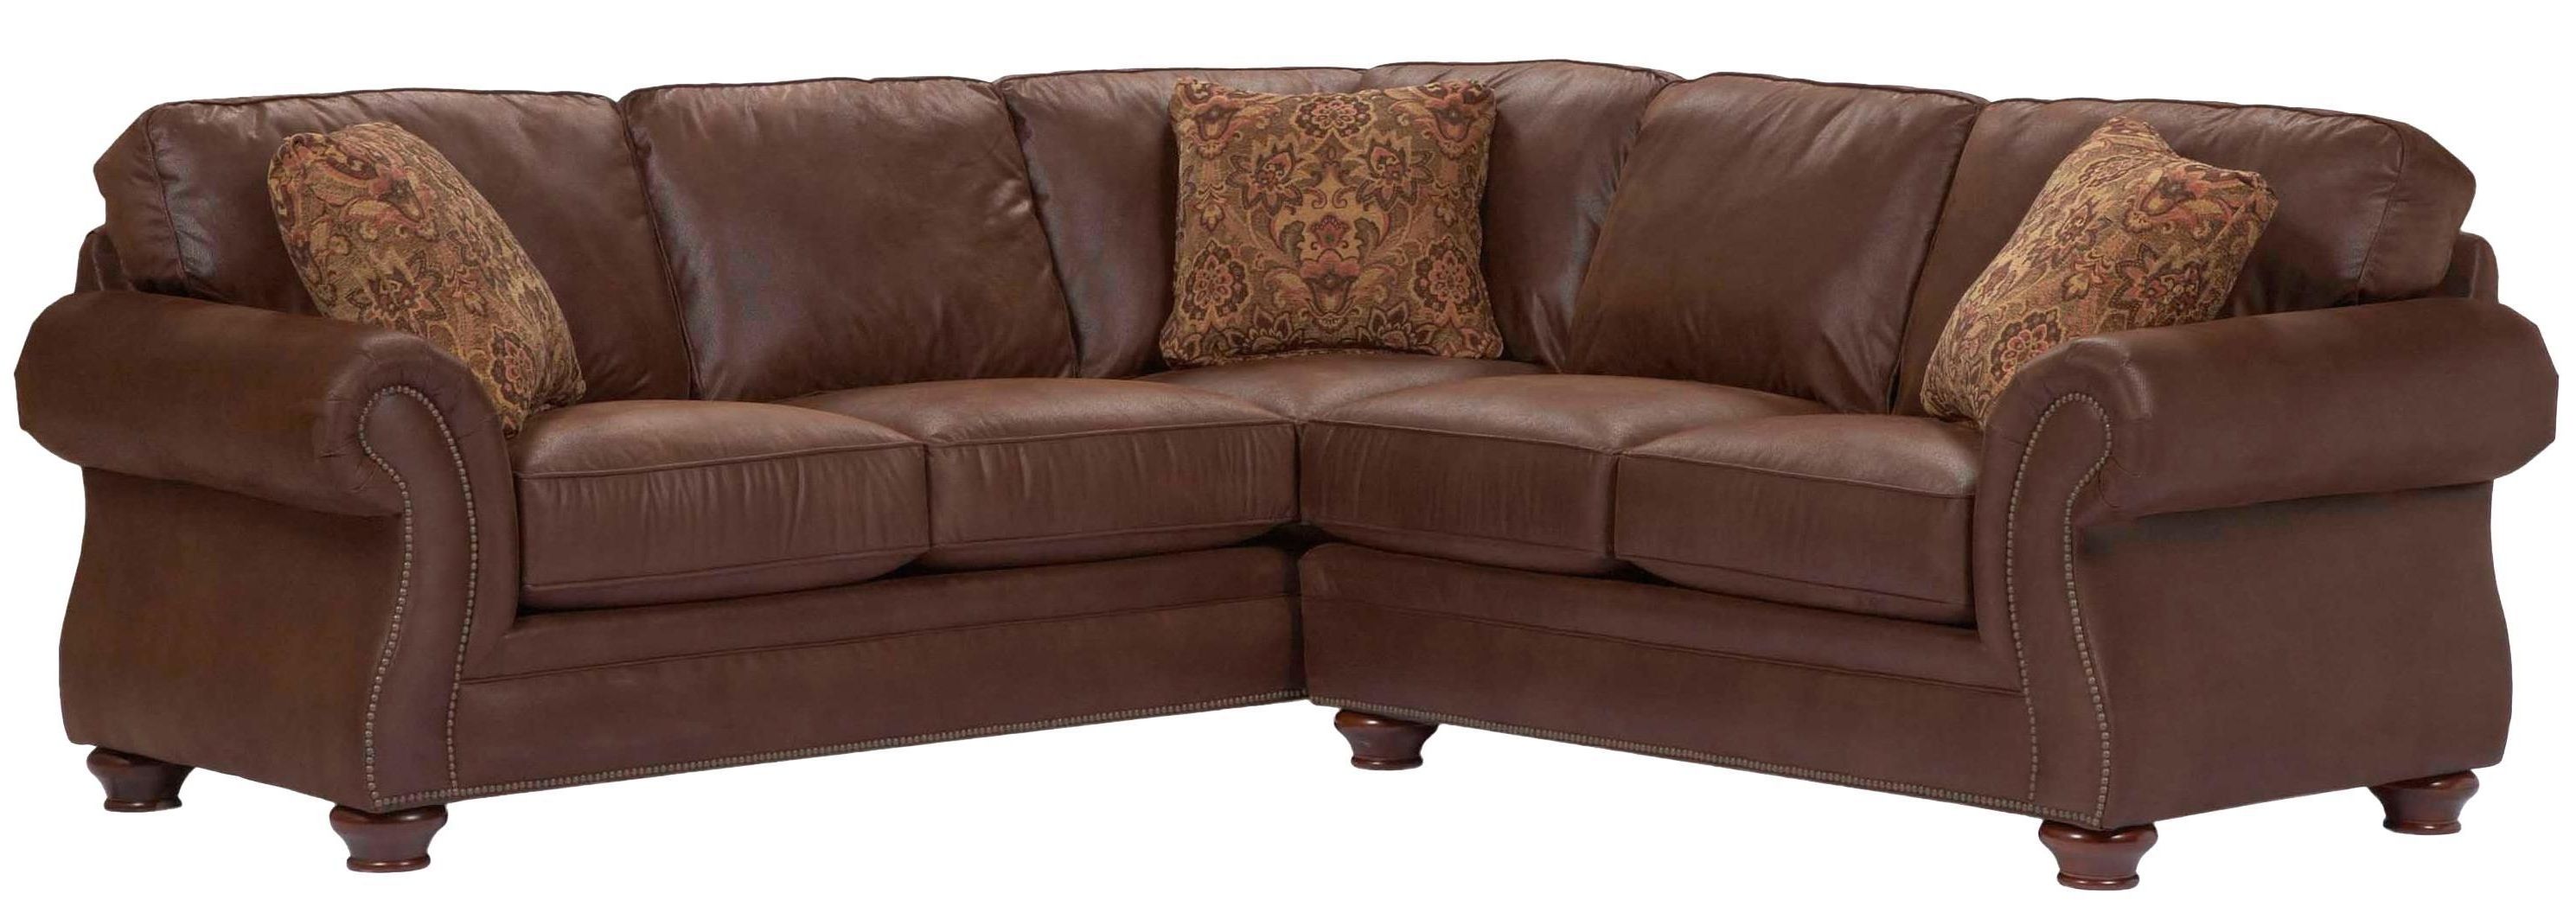 Preferred Broyhill Furniture Laramie 2 Piece Corner Sectional Sofa (View 11 of 15)